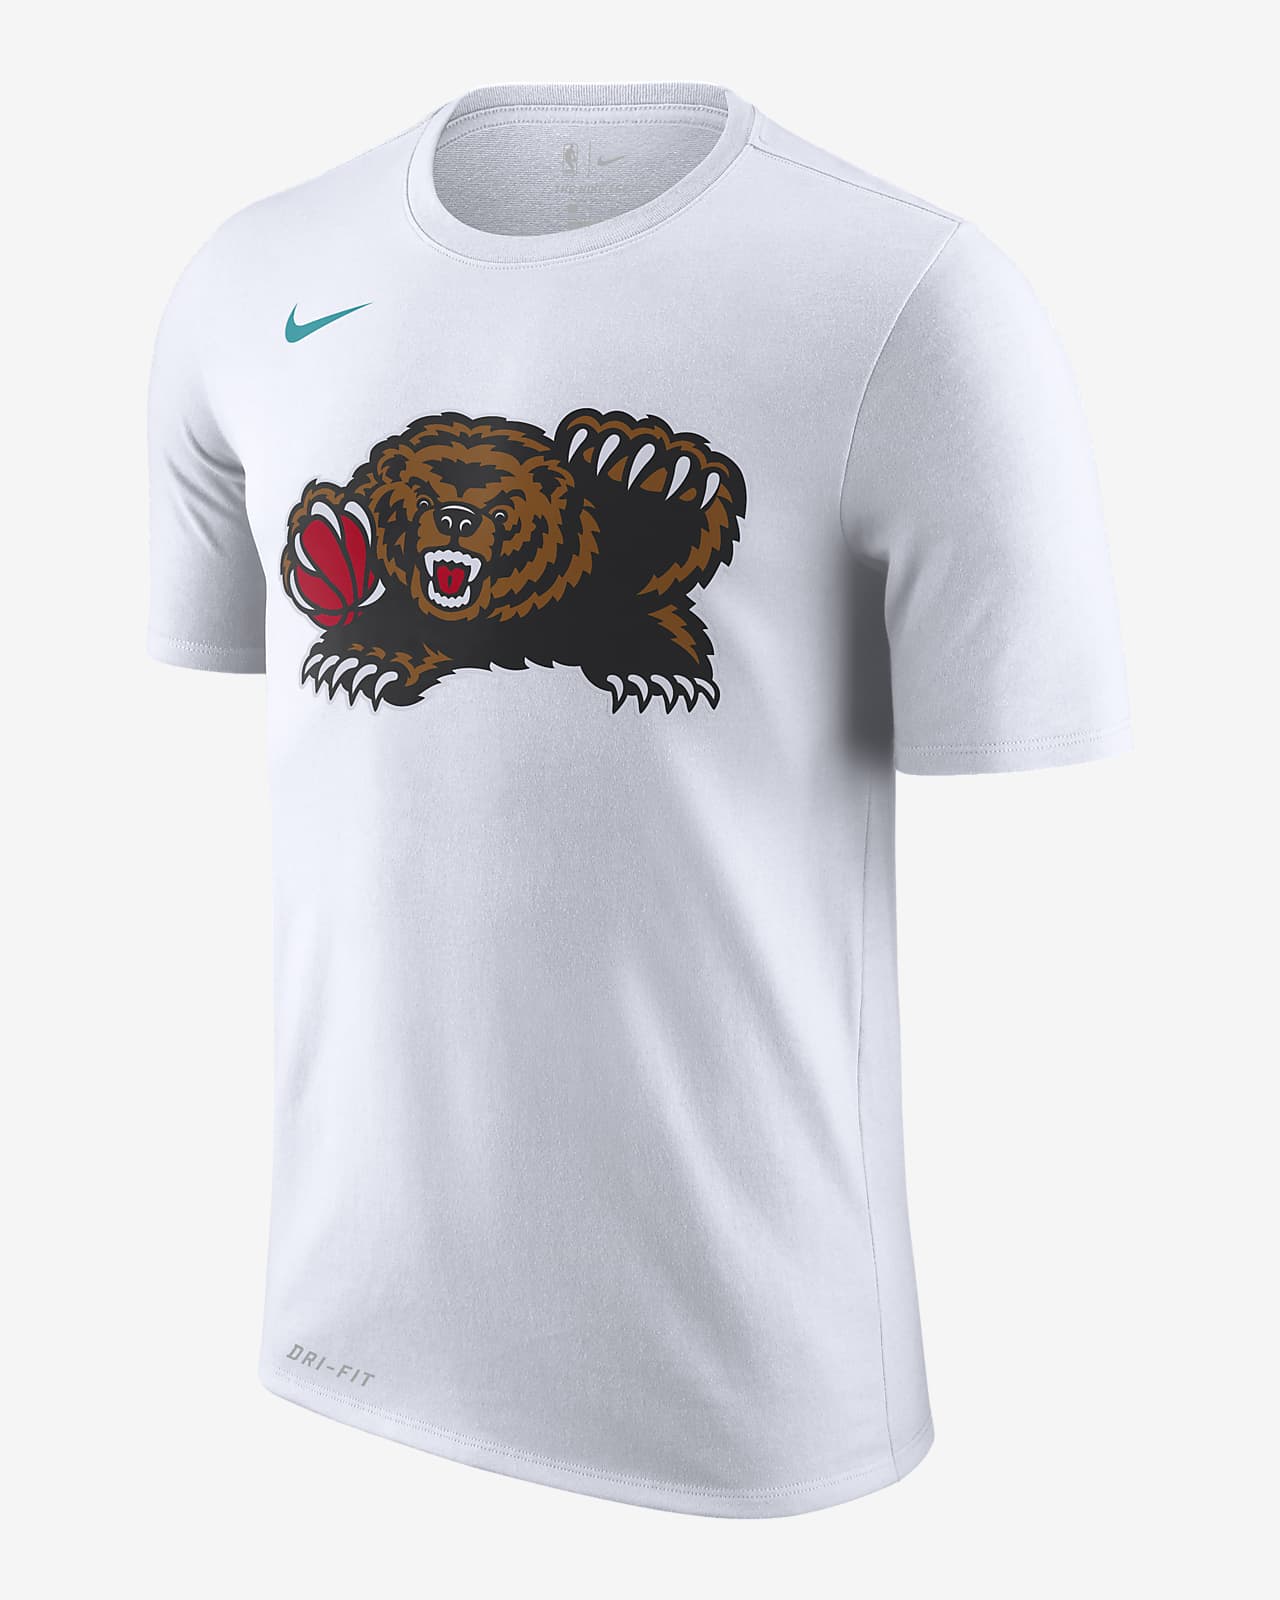 Nike Men's Temetrius Morant Memphis Grizzlies Icon Player T-Shirt - Macy's